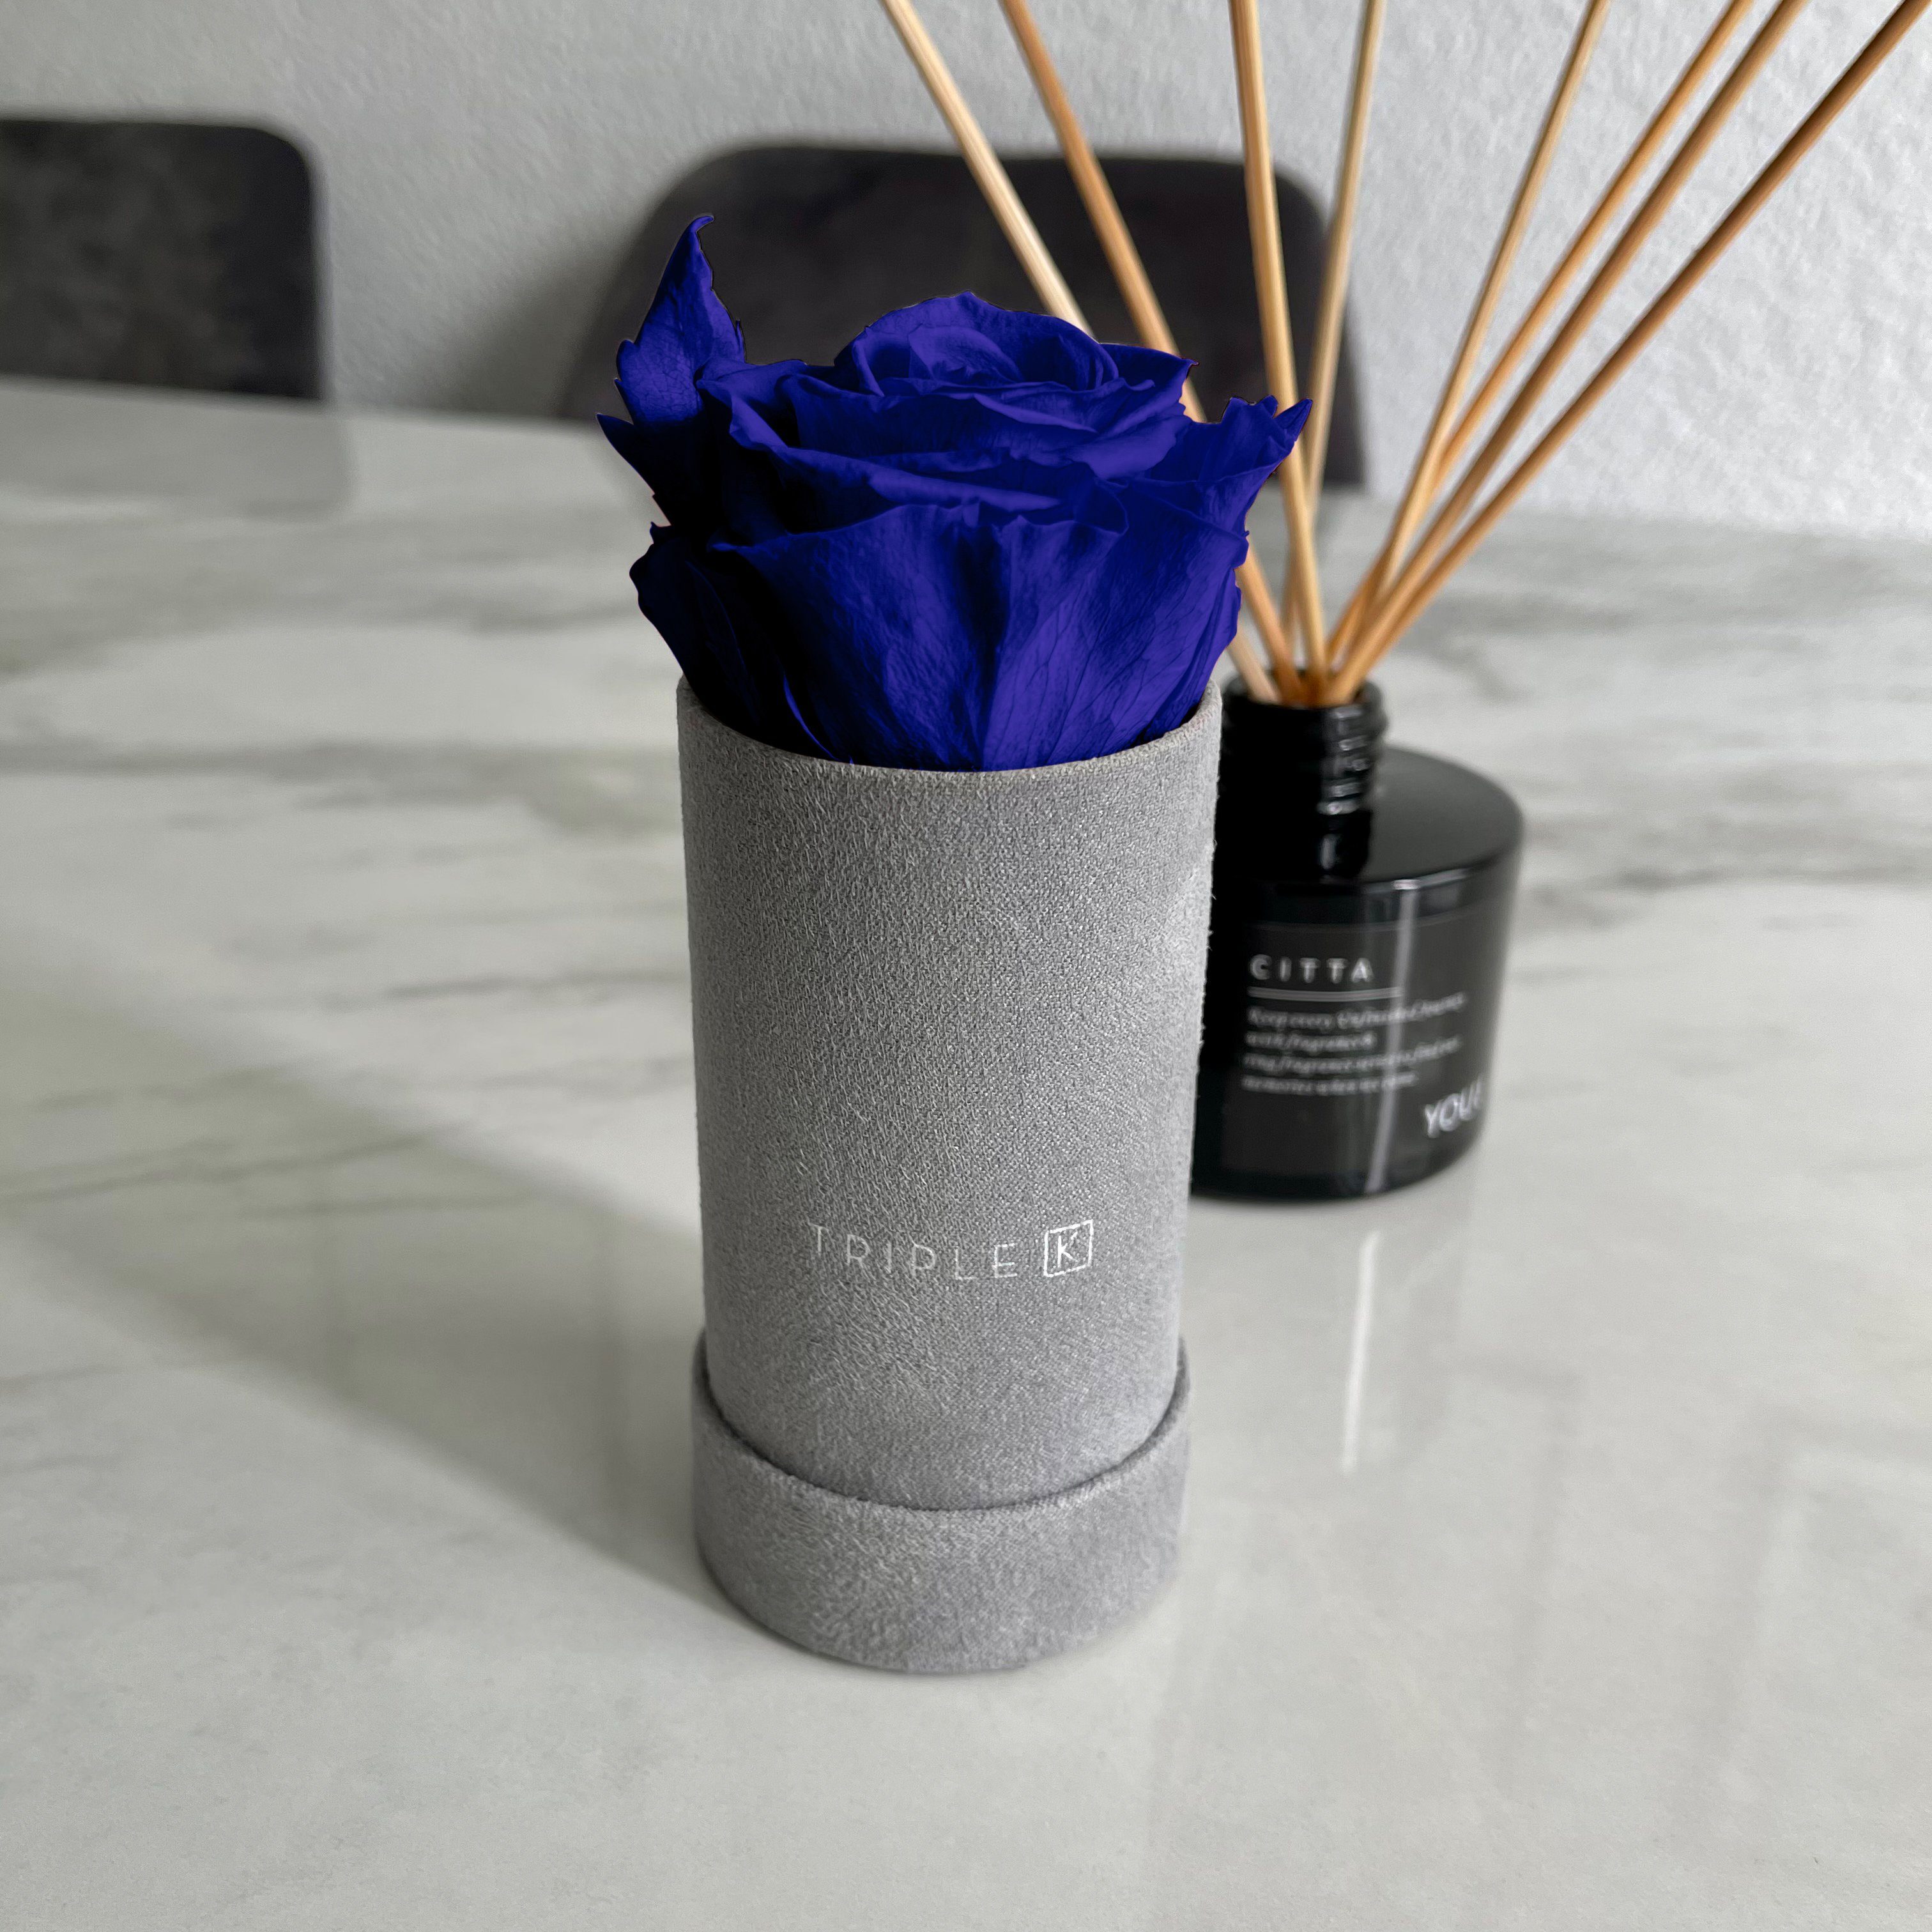 Kunstblume TRIPLE K mit Inkl. Flowerbox Jahre - Blumenbox Haltbar, bis Grußkarte TRIPLE Blau Rose, mit 3 Infinity Velvet Rosen, Infinity K konservierten Rosen, Rosenbox